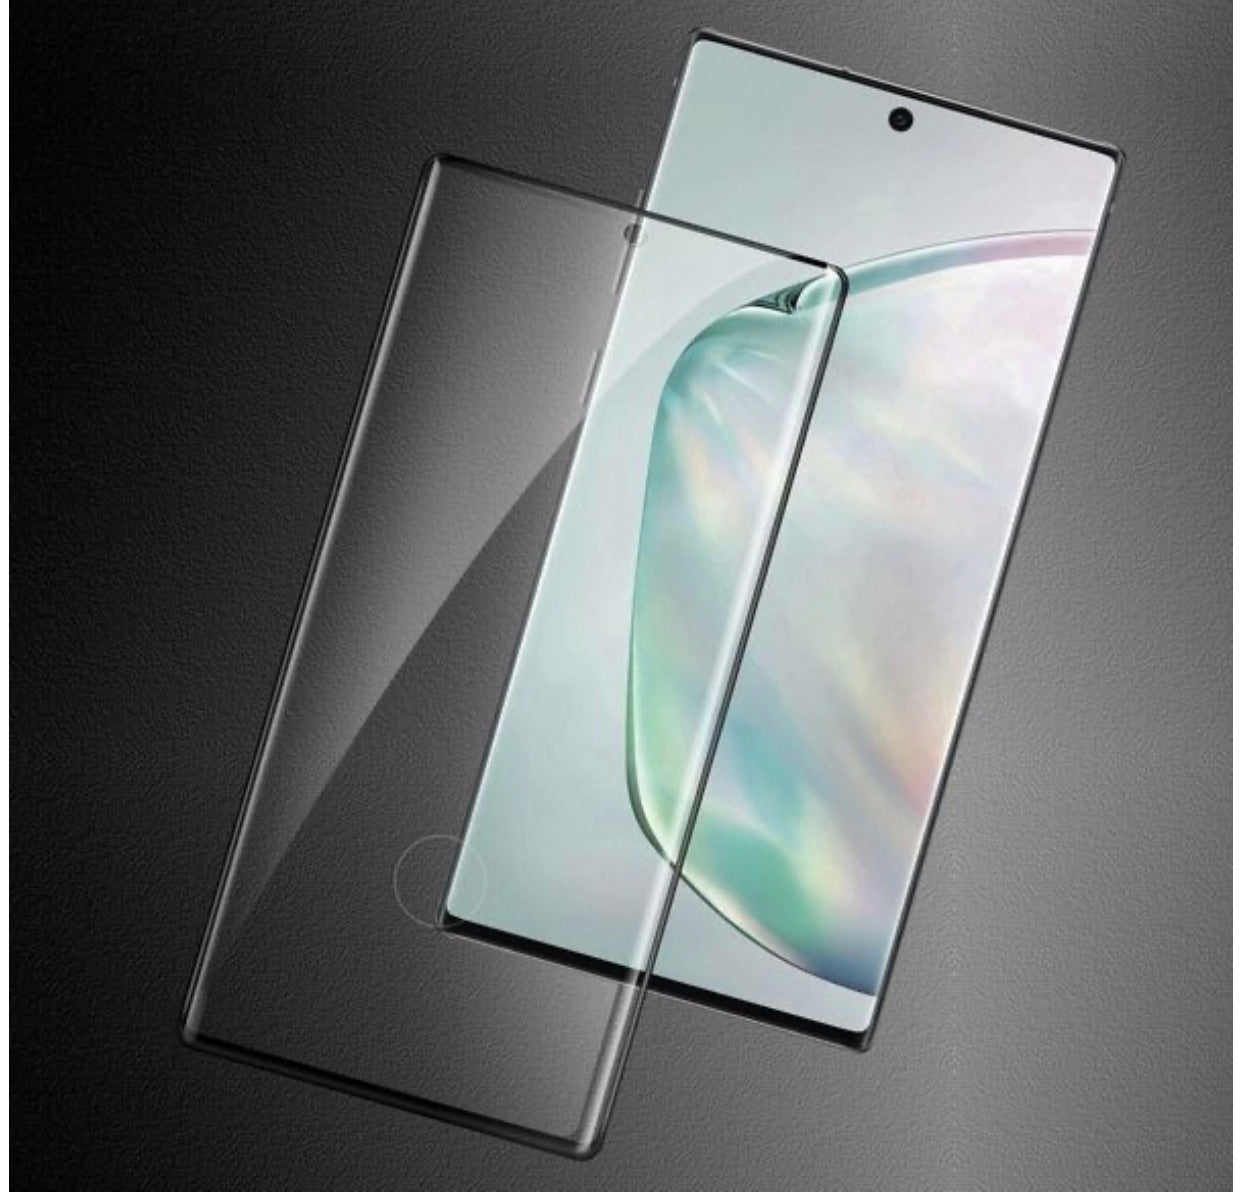 Galaxy Note 10+ Premium Glass